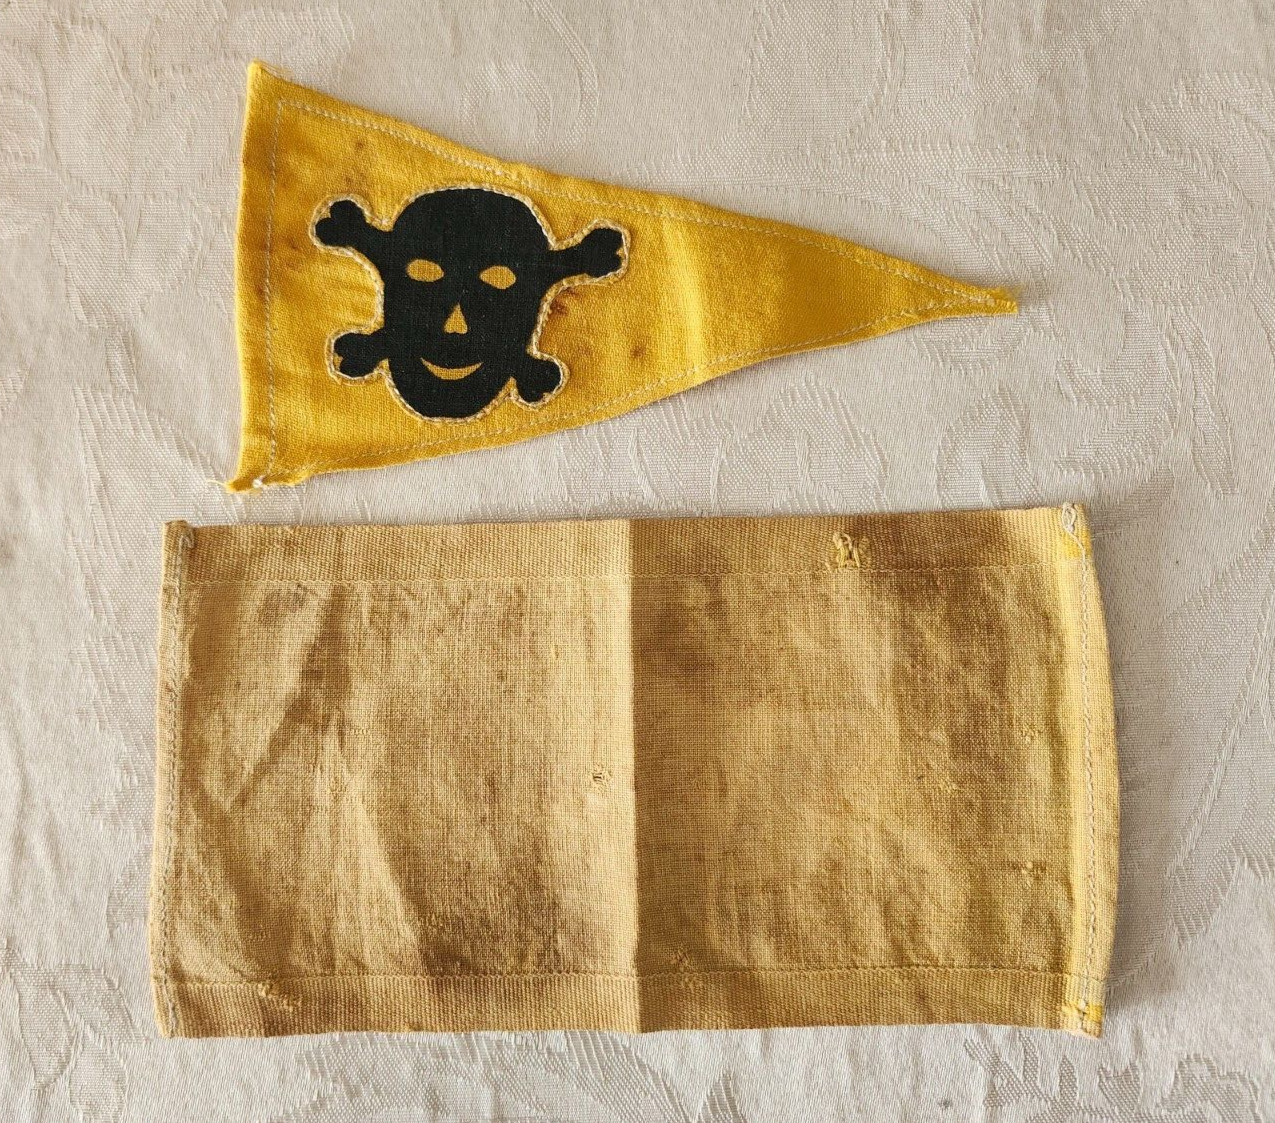 WW2 German minen warning flag.